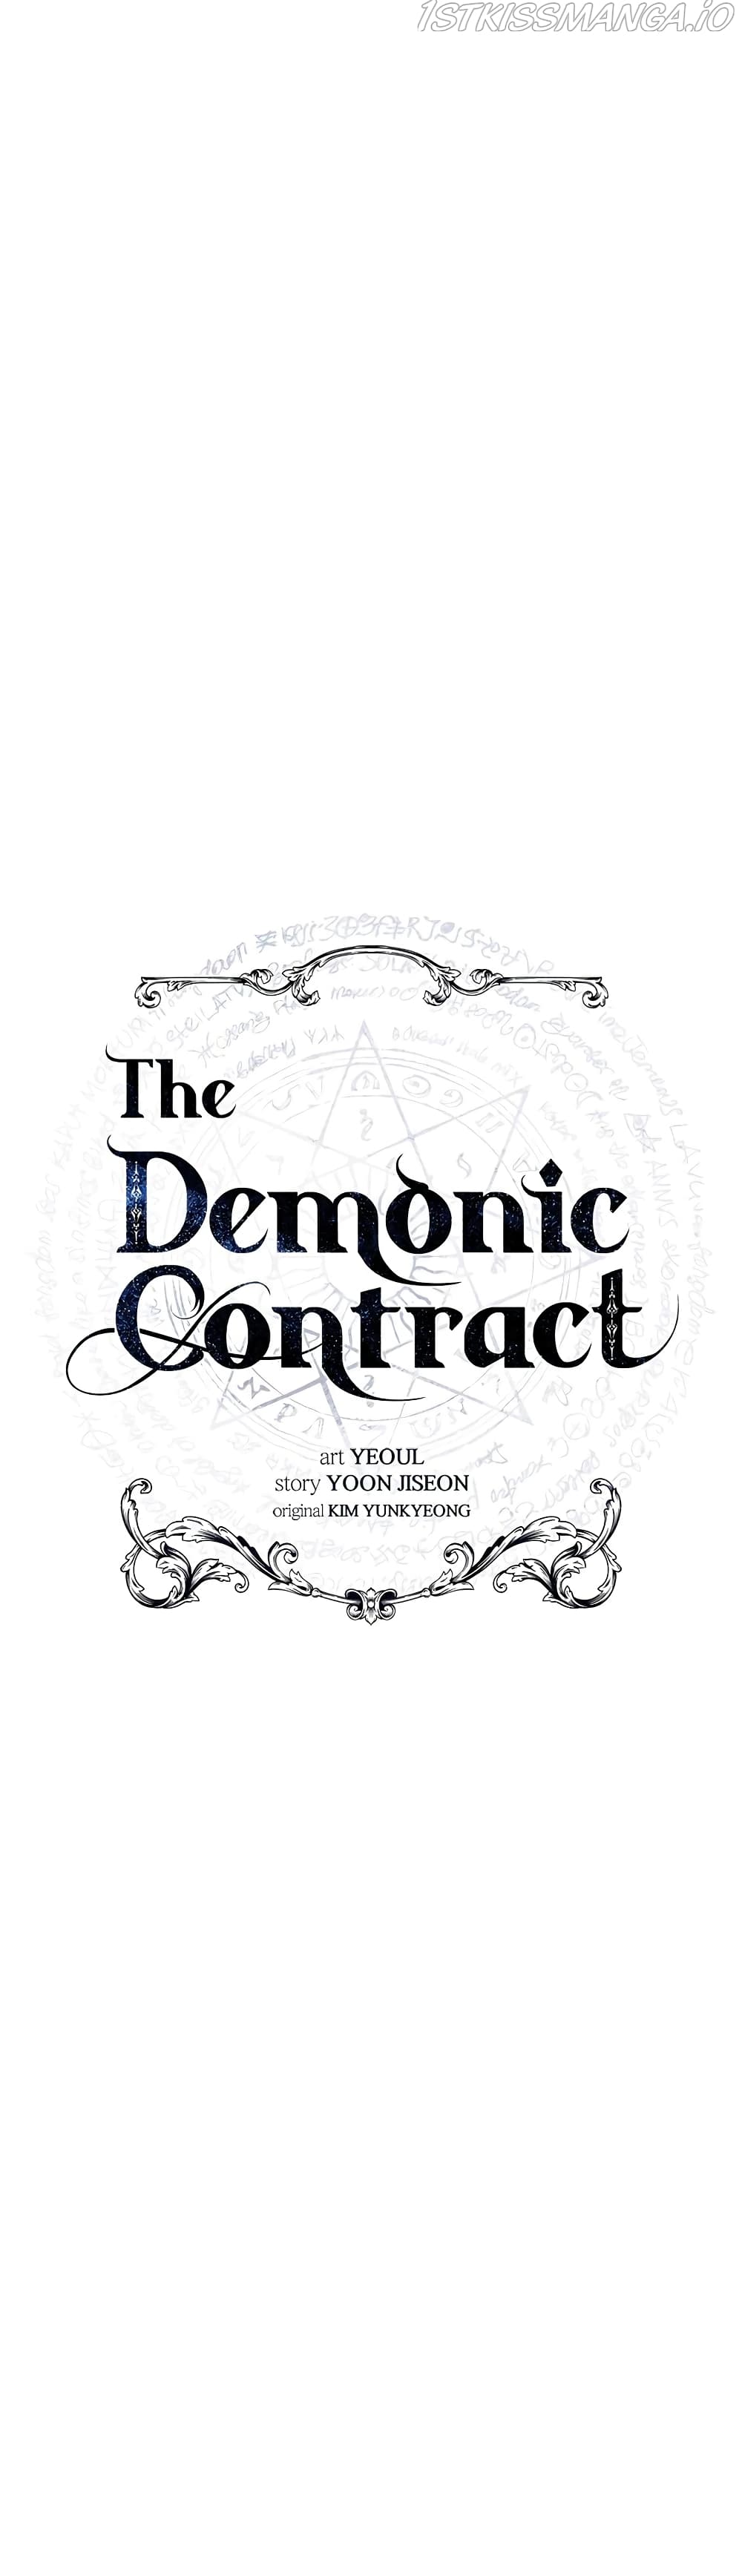 The Demonic Contract ตอนที่ 56 (9)